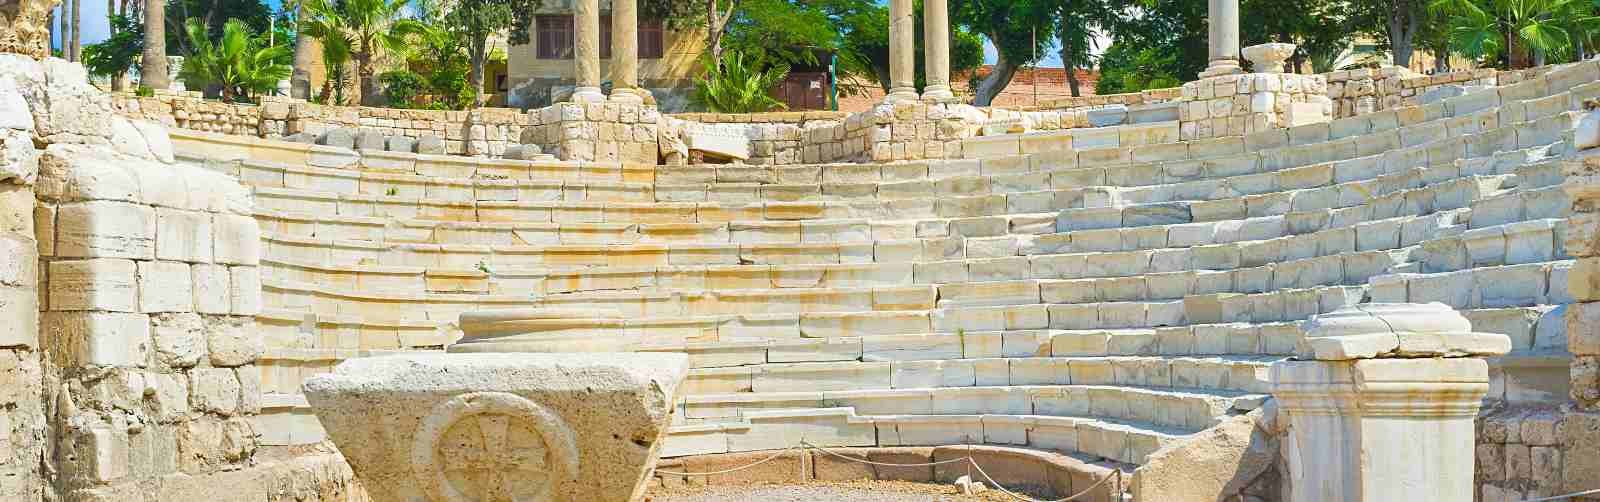 O anfiteatro romano de Alexandria